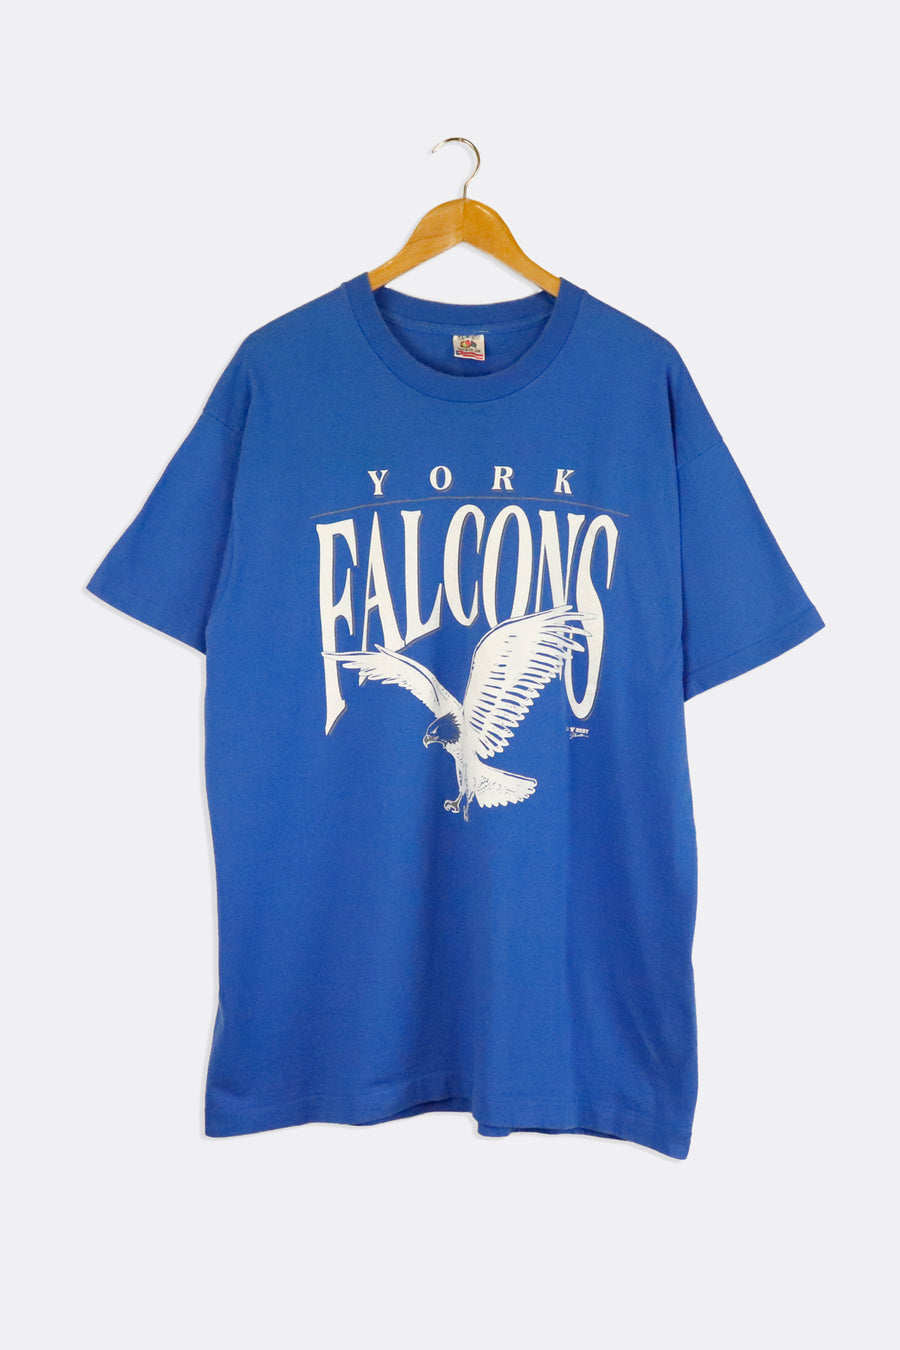 Vintage NCAA York Falcons Vinyl Falcon Graphic And Lettering T Shirt Sz XL